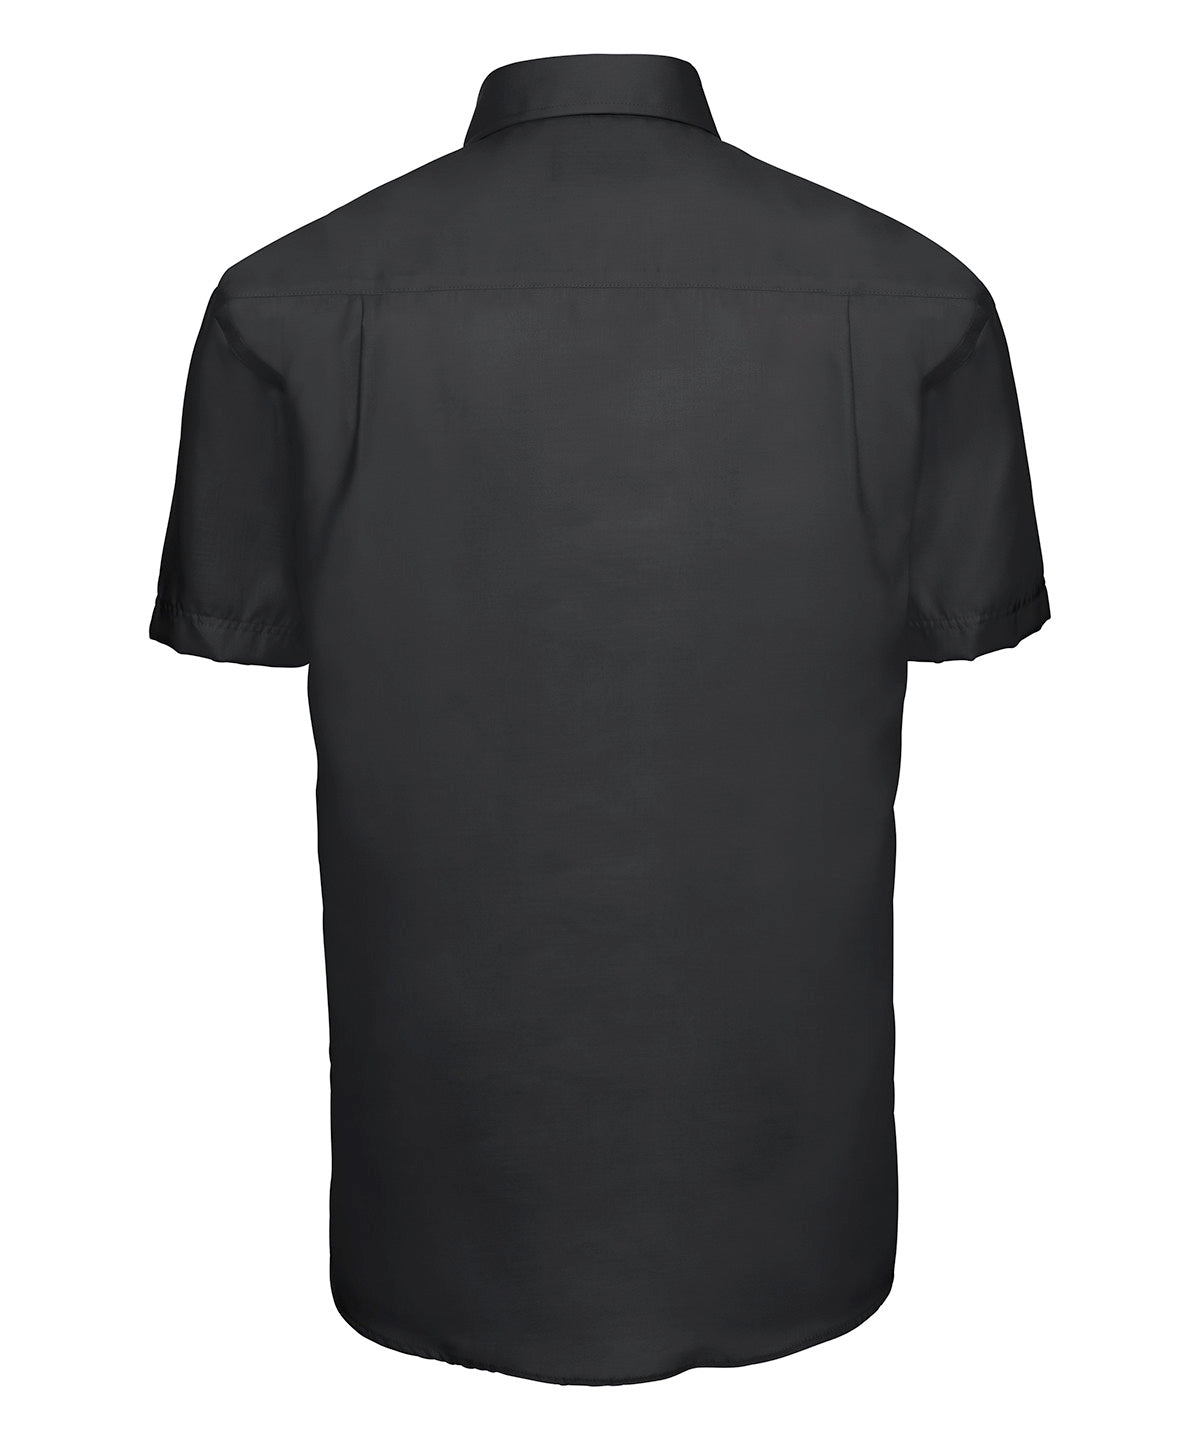 Short sleeve ultimate non-iron shirt